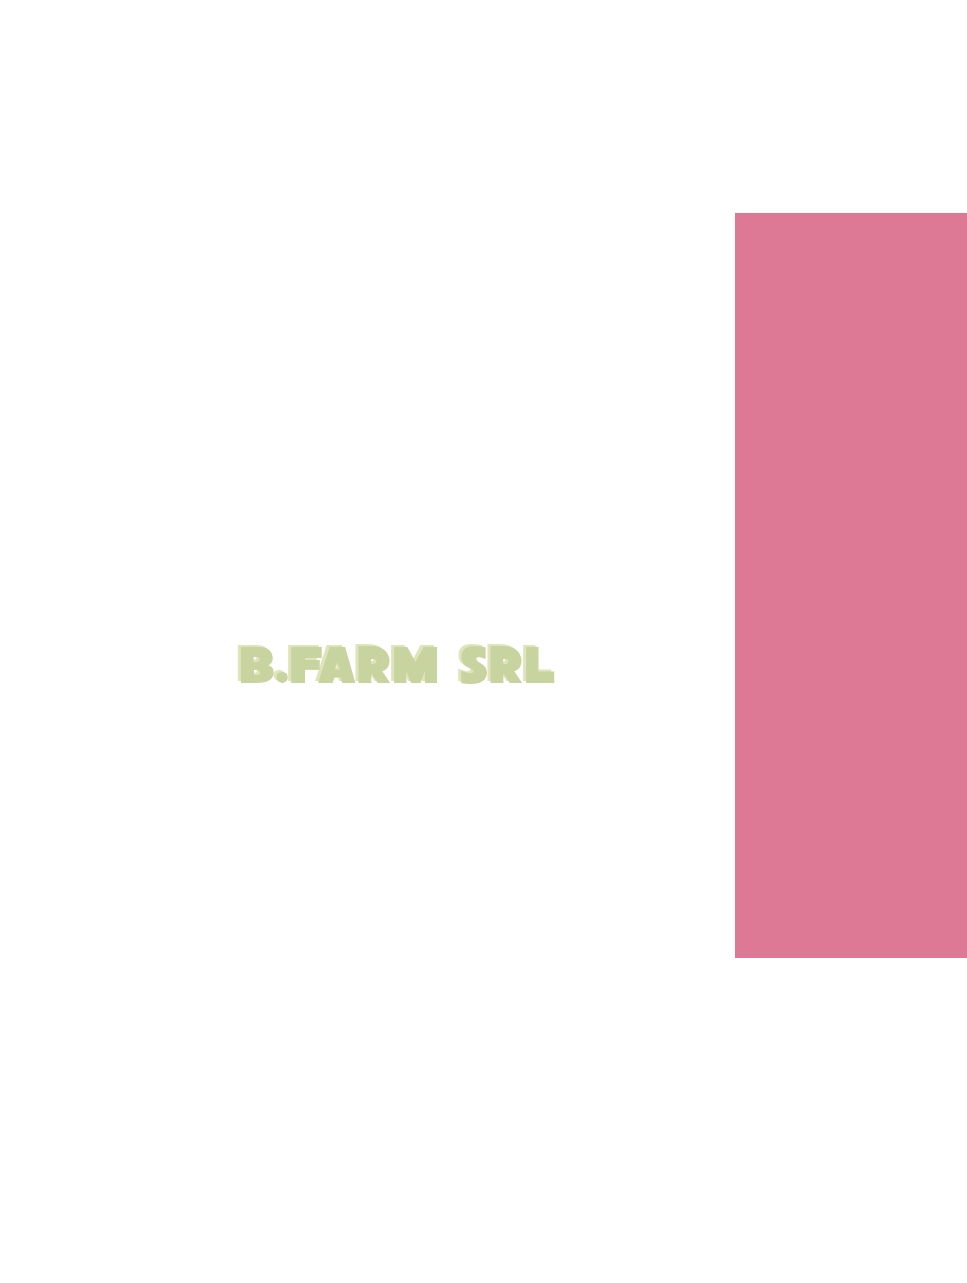 logo B.Farm Srl